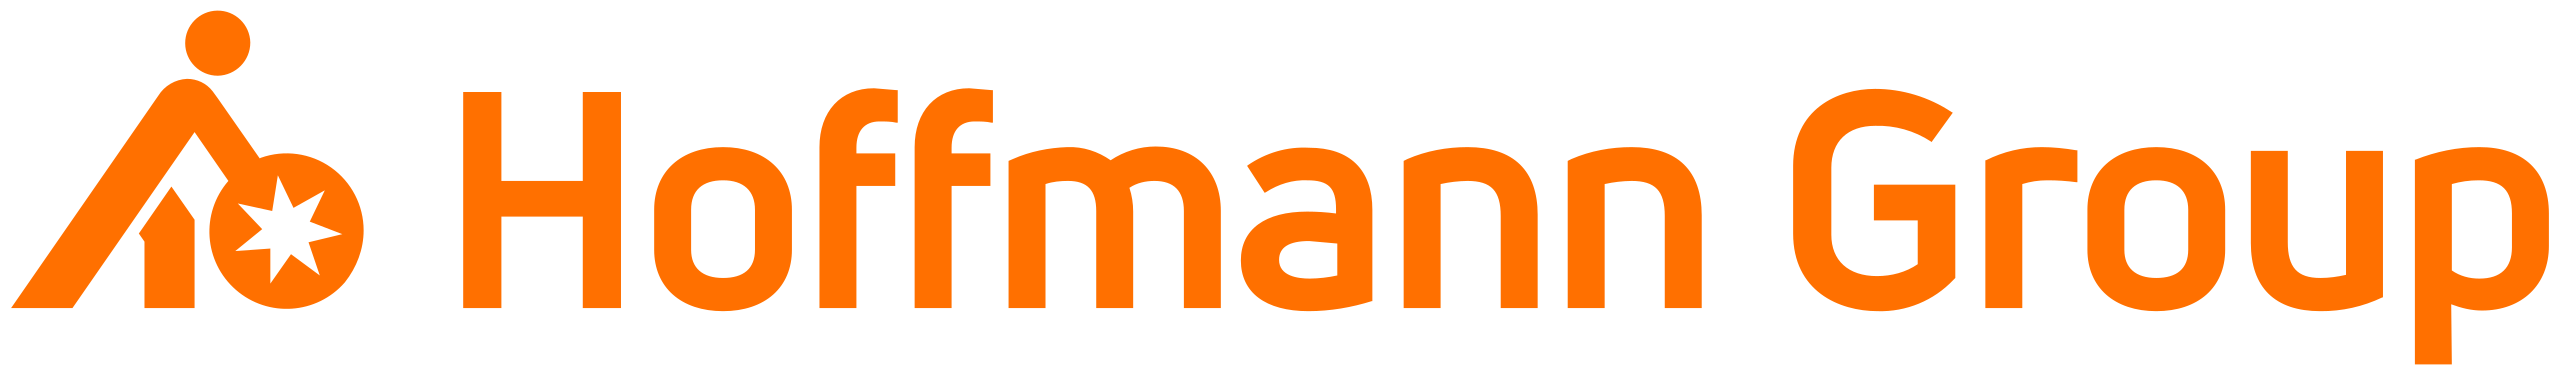 Hoffmann_Group_logo.svg-1